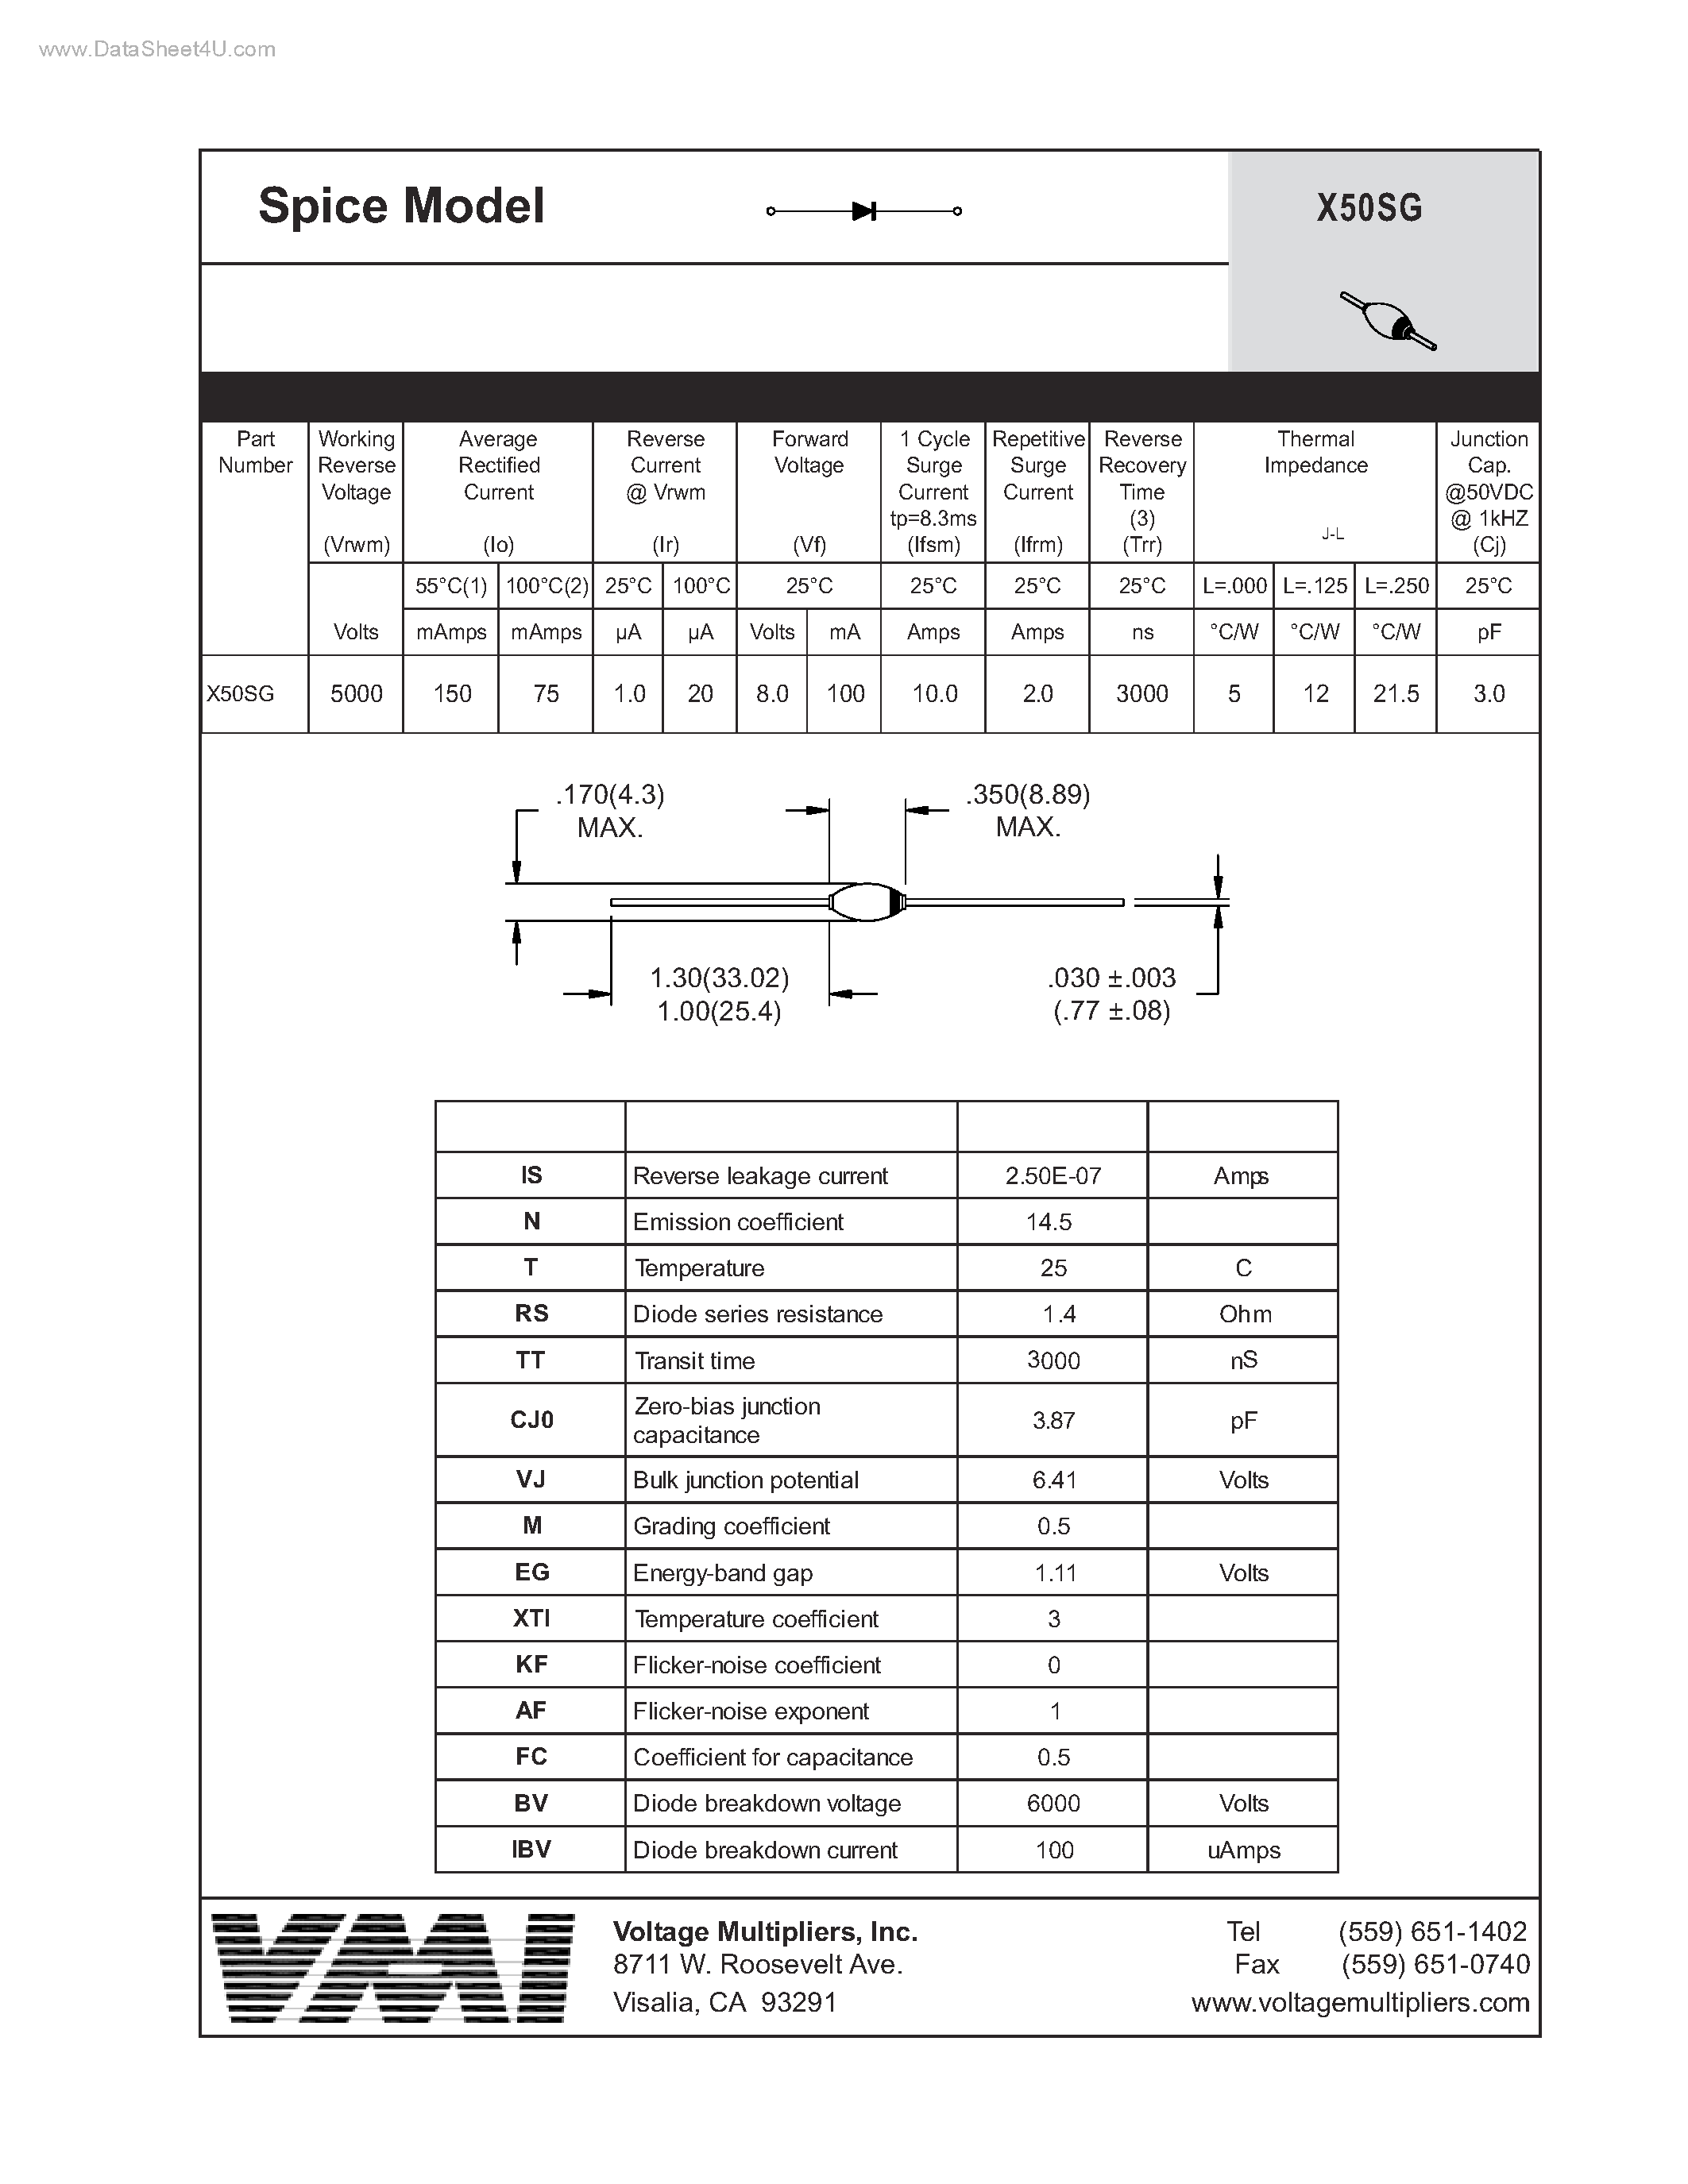 Datasheet X50SG - Spice Model page 1